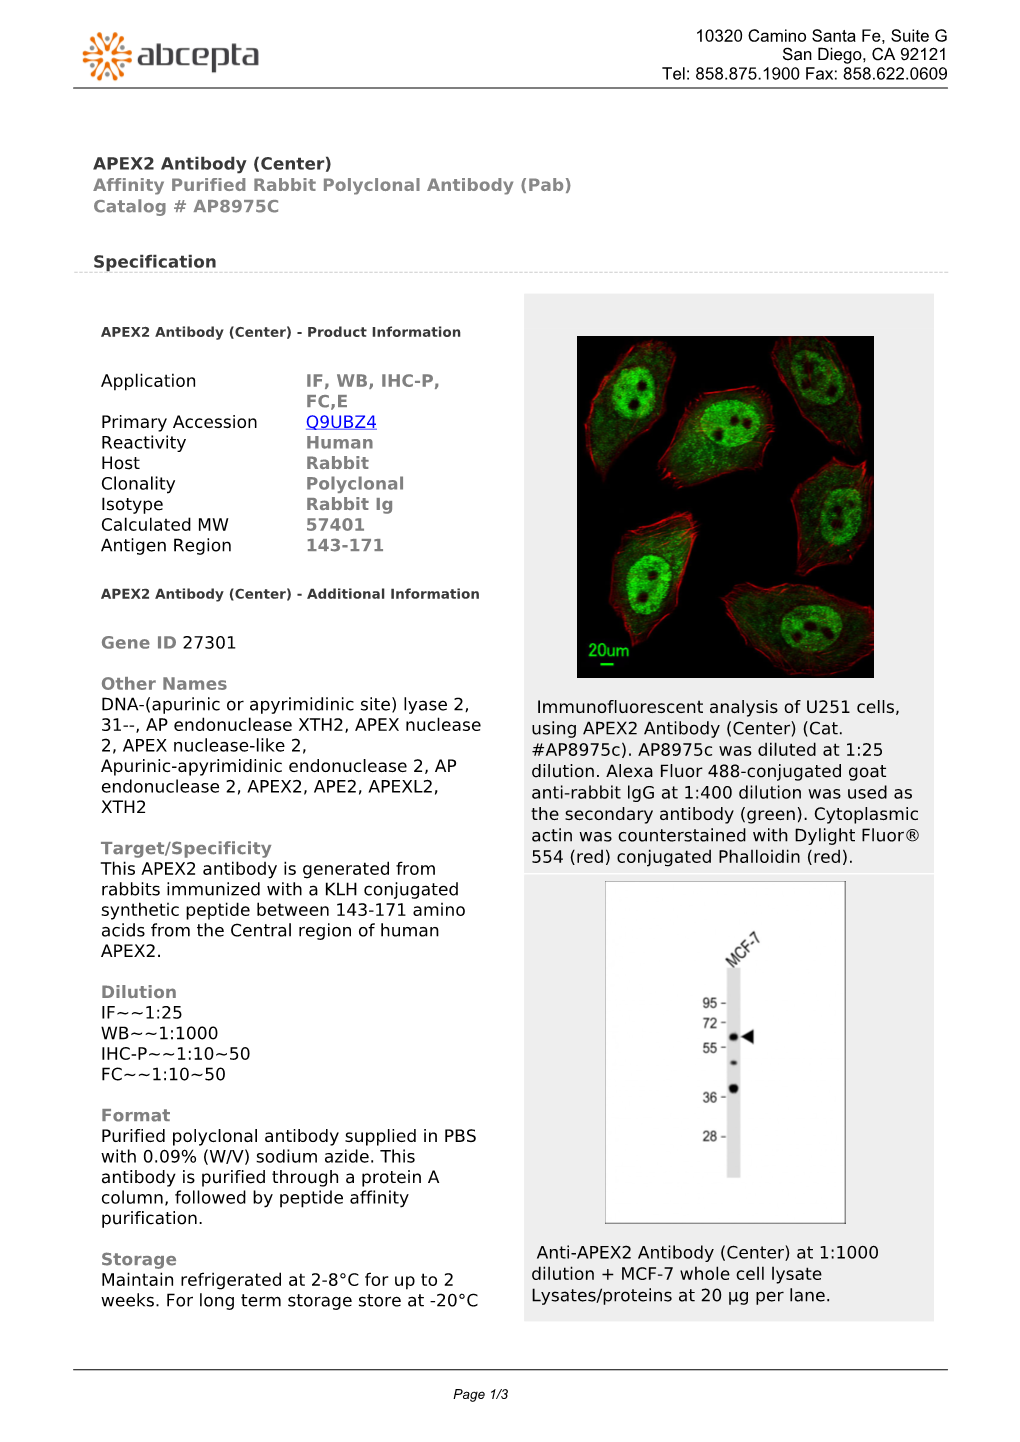 APEX2 Antibody (Center) Affinity Purified Rabbit Polyclonal Antibody (Pab) Catalog # AP8975C